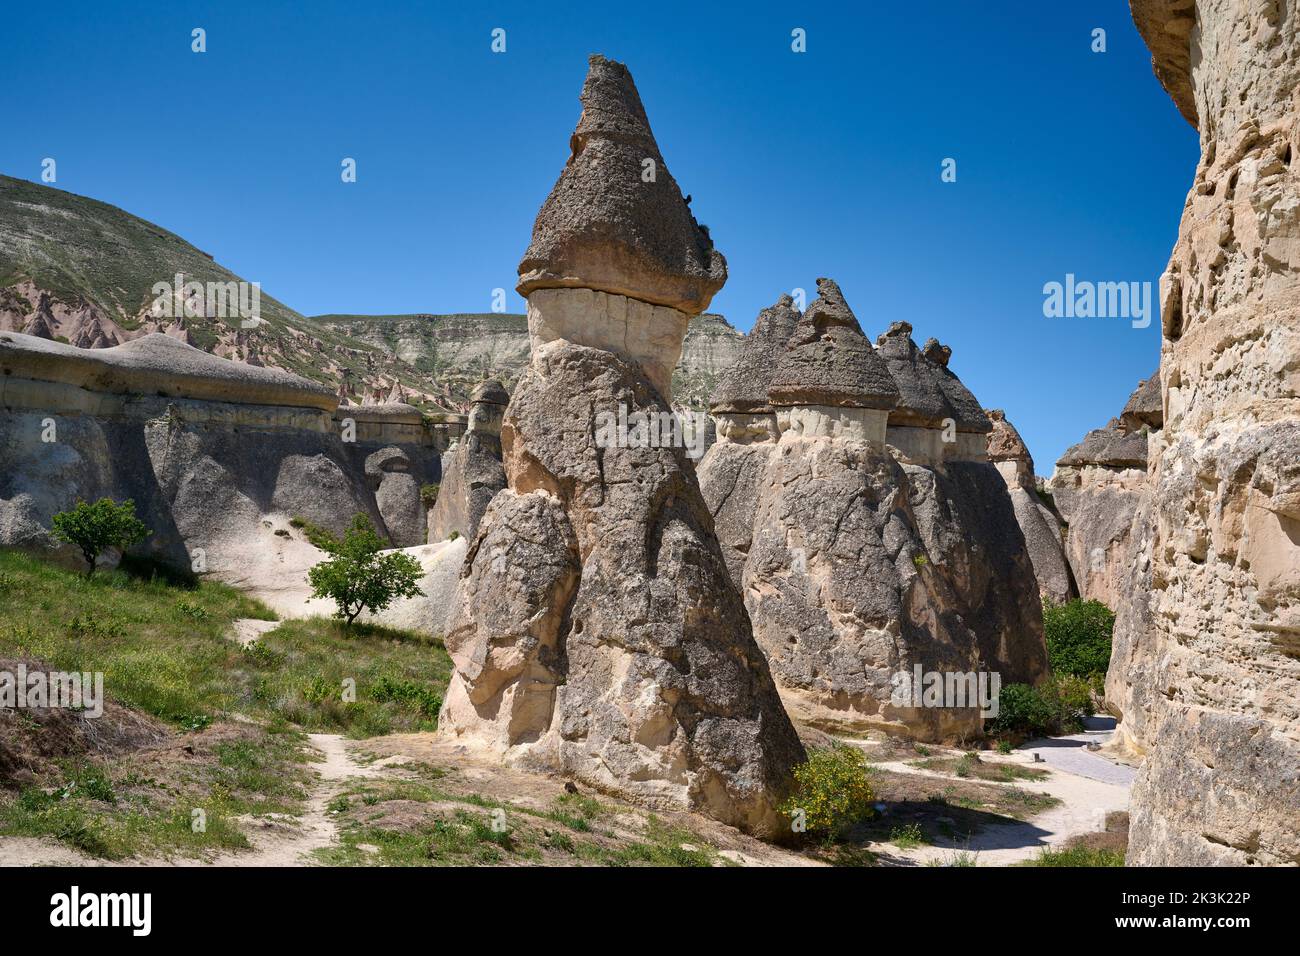 Pintoresco paisaje de rocas de piedra arenisca en forma. Famosas Chimeneas de Hadas o setas de piedra multicabeza en el Valle de Pasaba, Goreme, Capadocia, Anatolia Foto de stock